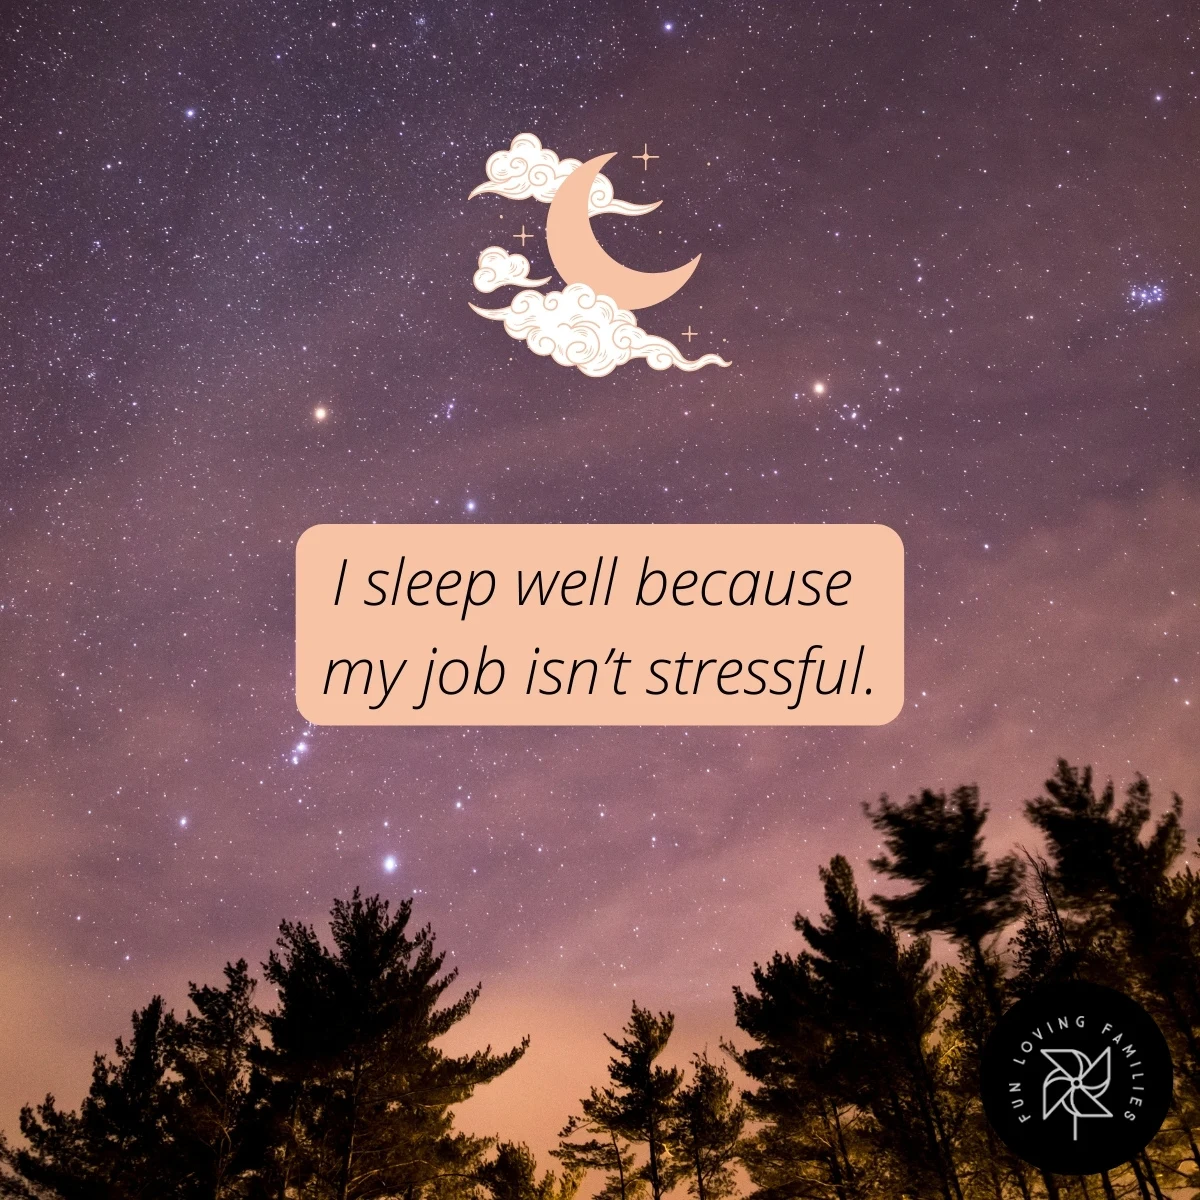 I sleep well because my job isn’t stressful affirmation